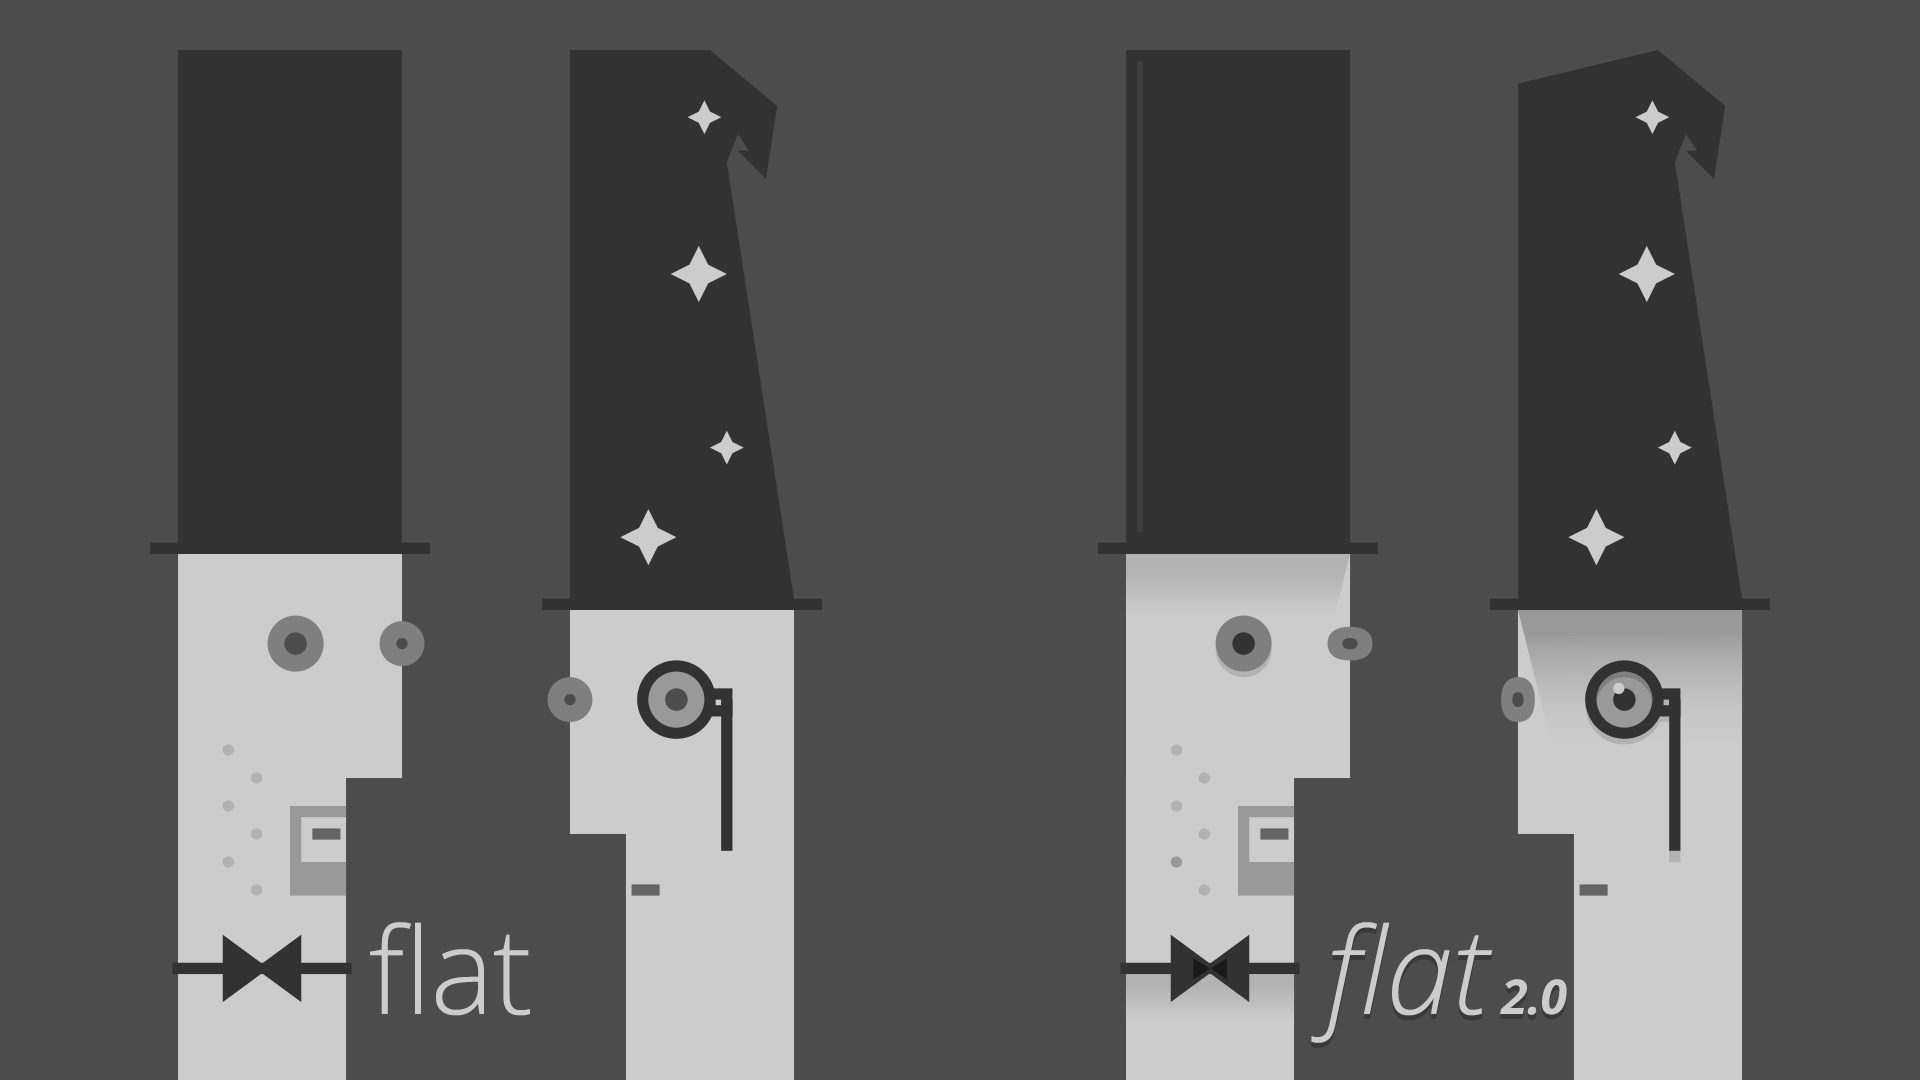 Flat Design vs. Flat Design 2.0